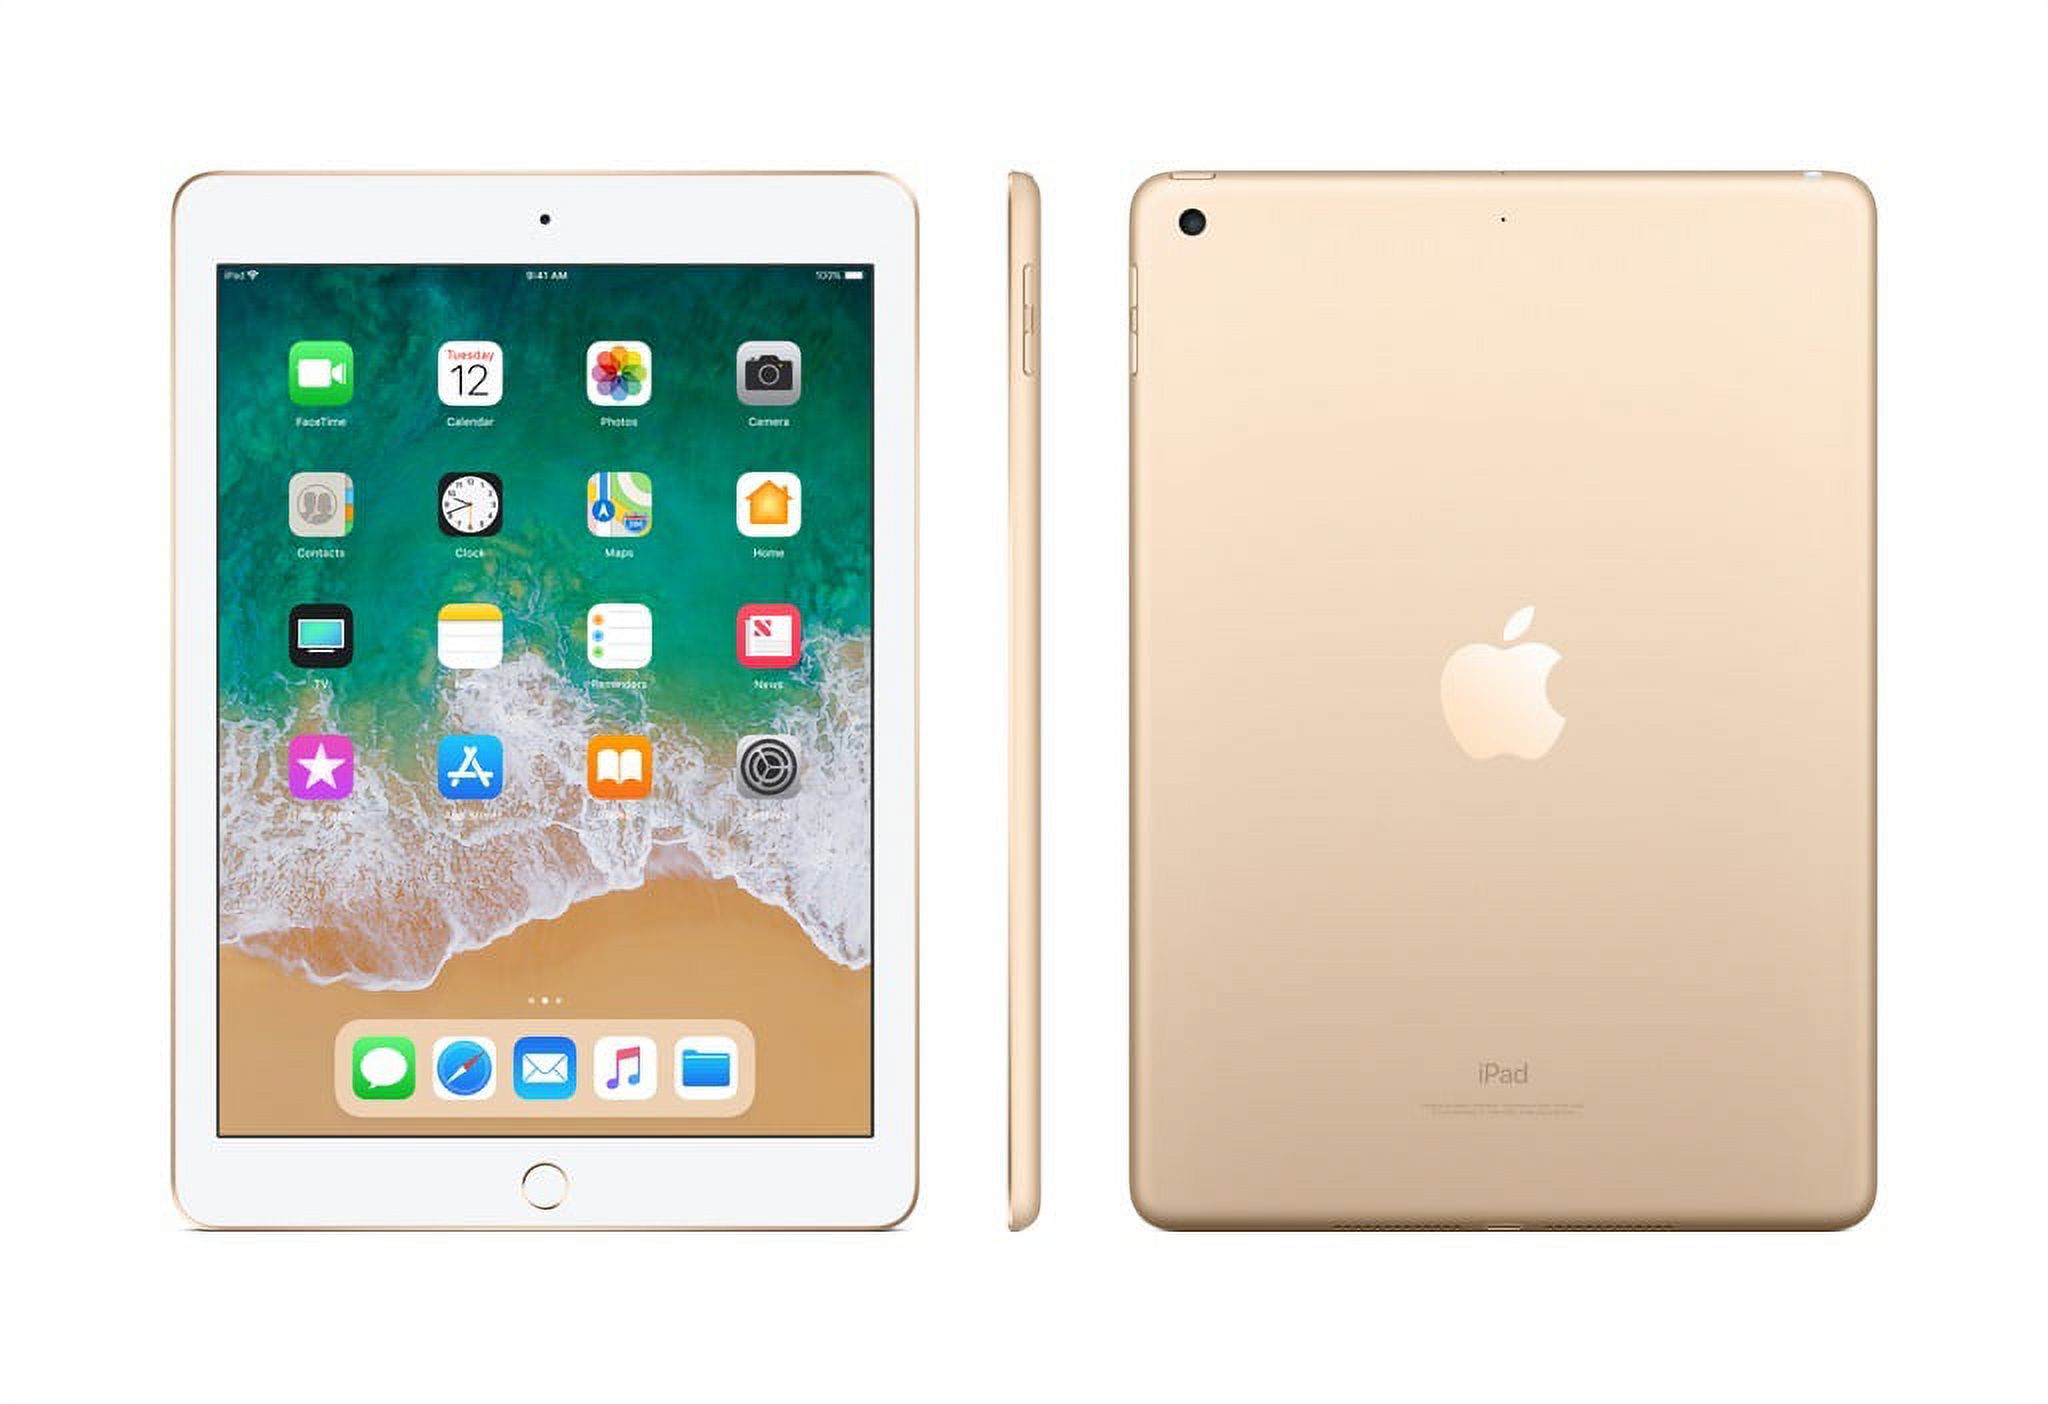 Apple iPad (5th Generation) 32GB Wi-Fi Gold - image 2 of 4